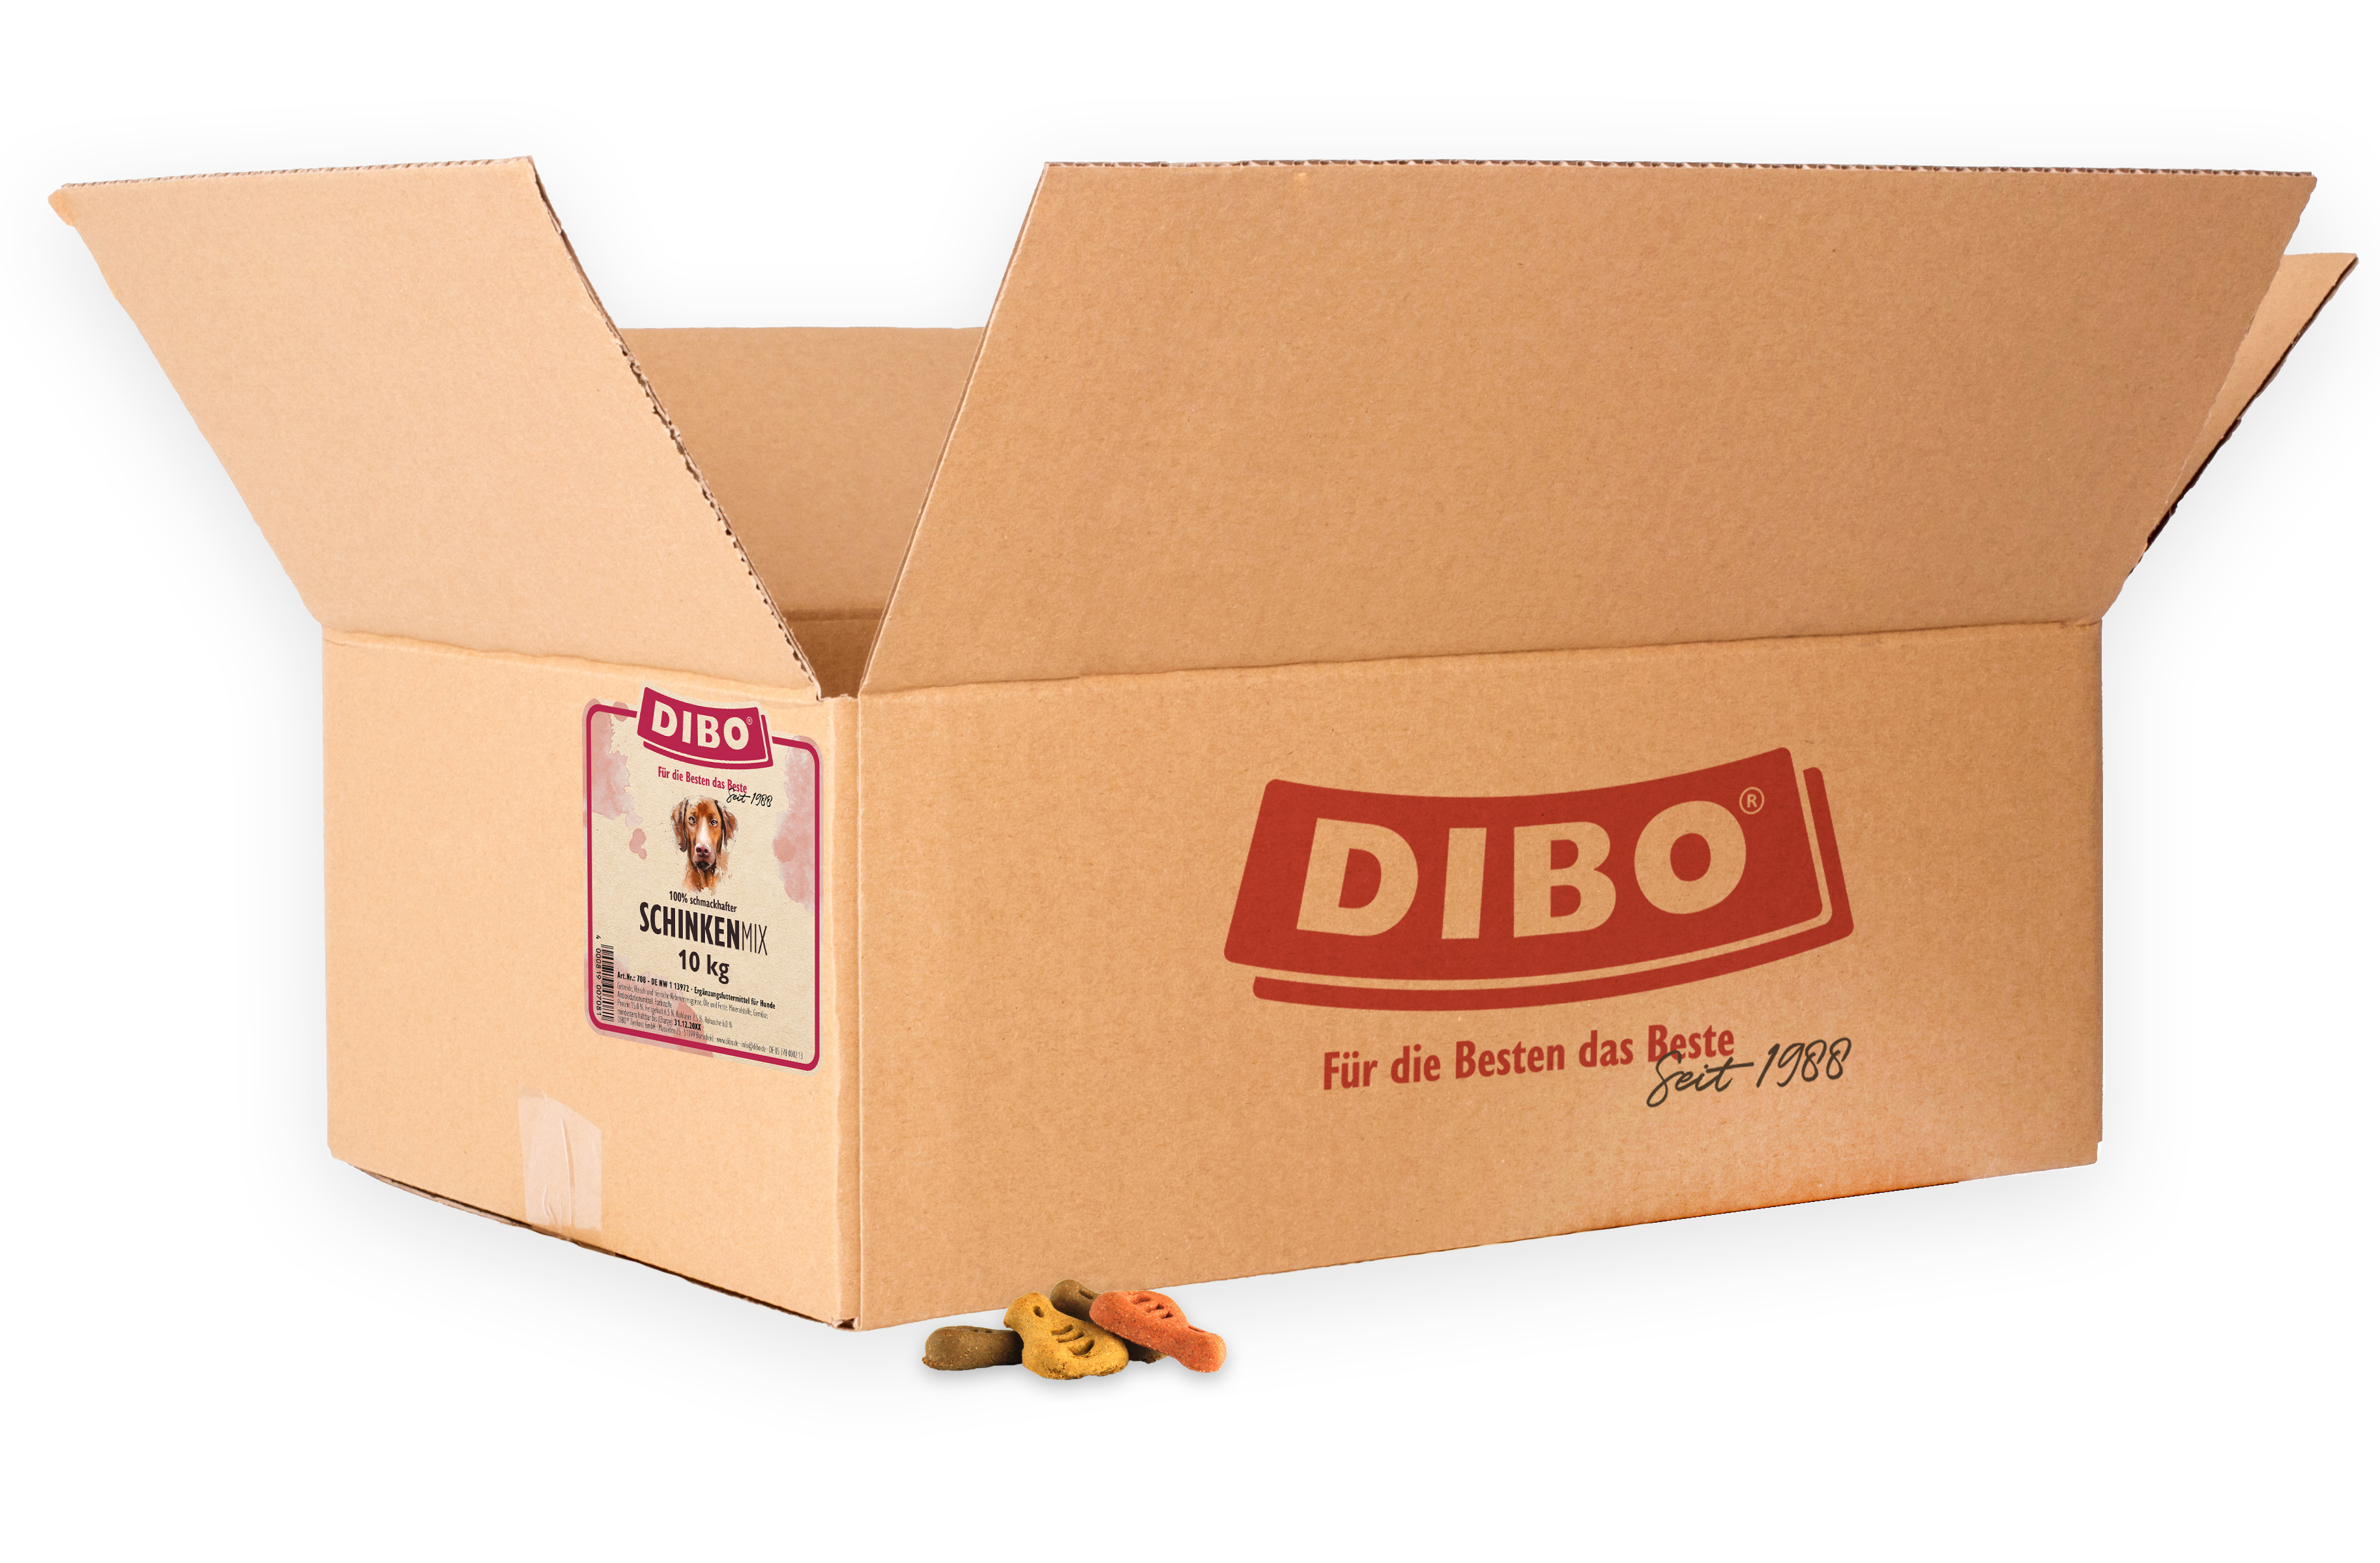 DIBO Schinken-Mix, 10kg-Karton